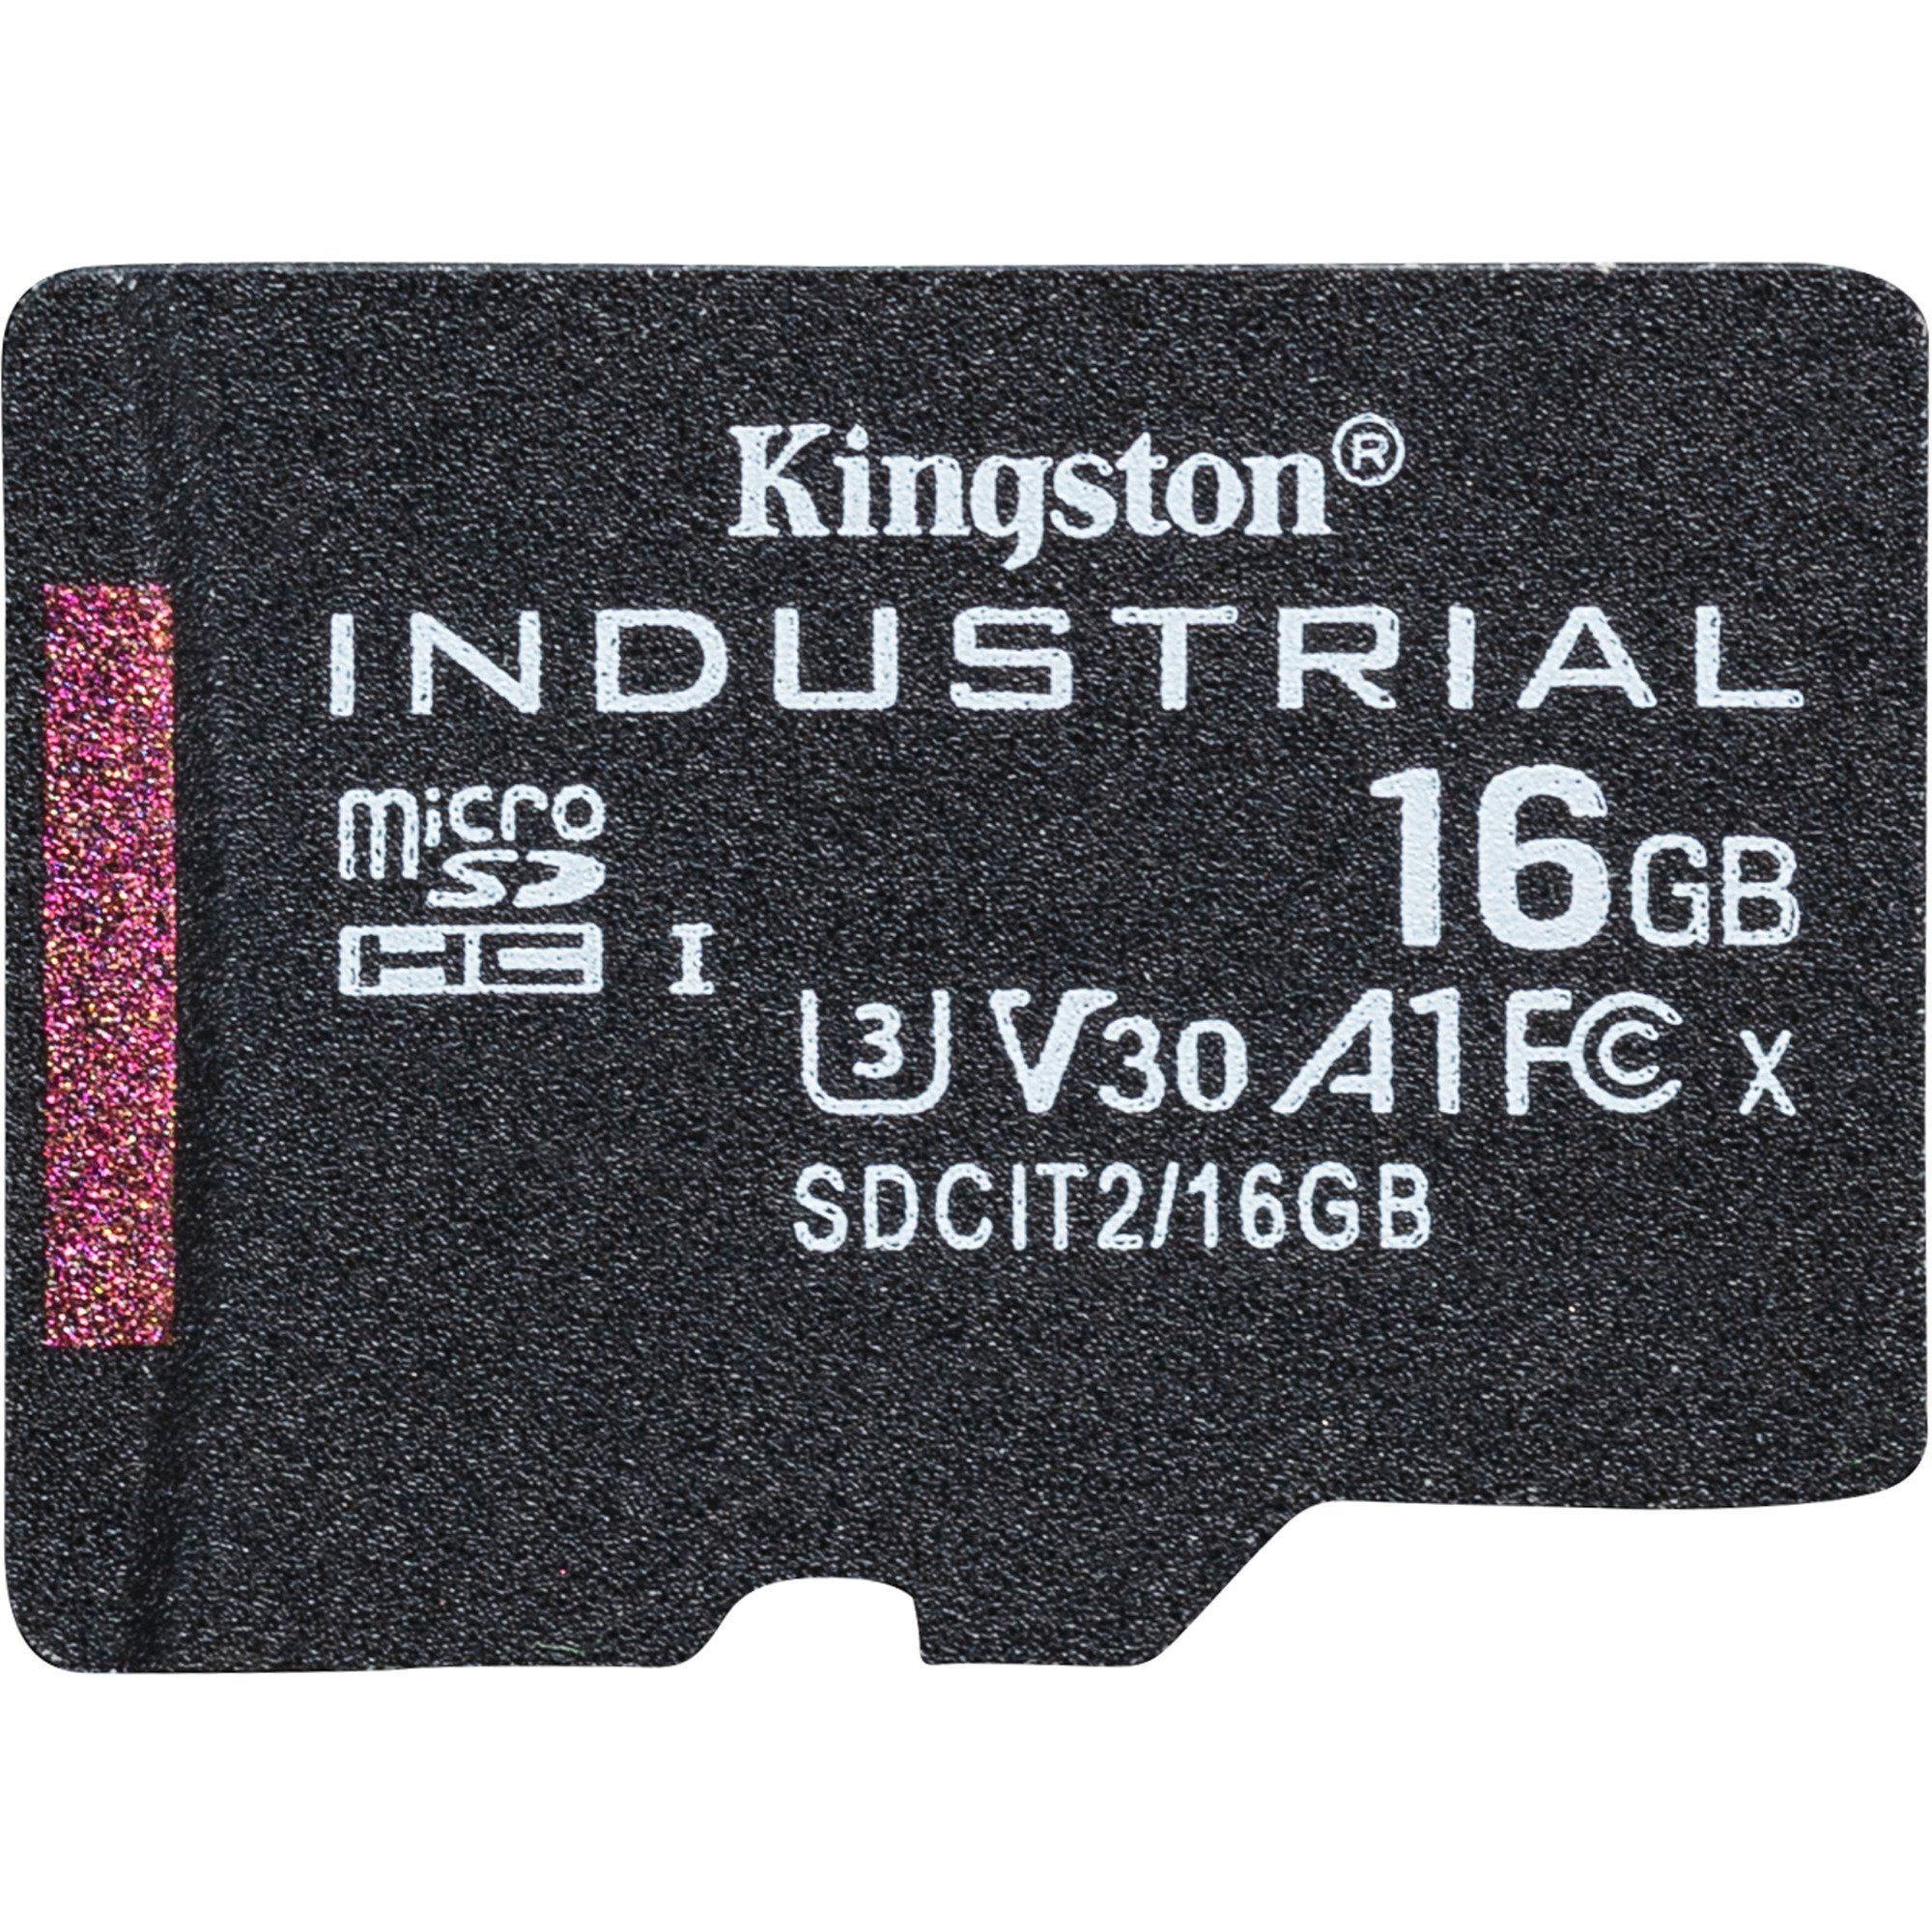 Kingston Industrial 16 GB microSDHC Speicherkarte (16 GB GB)